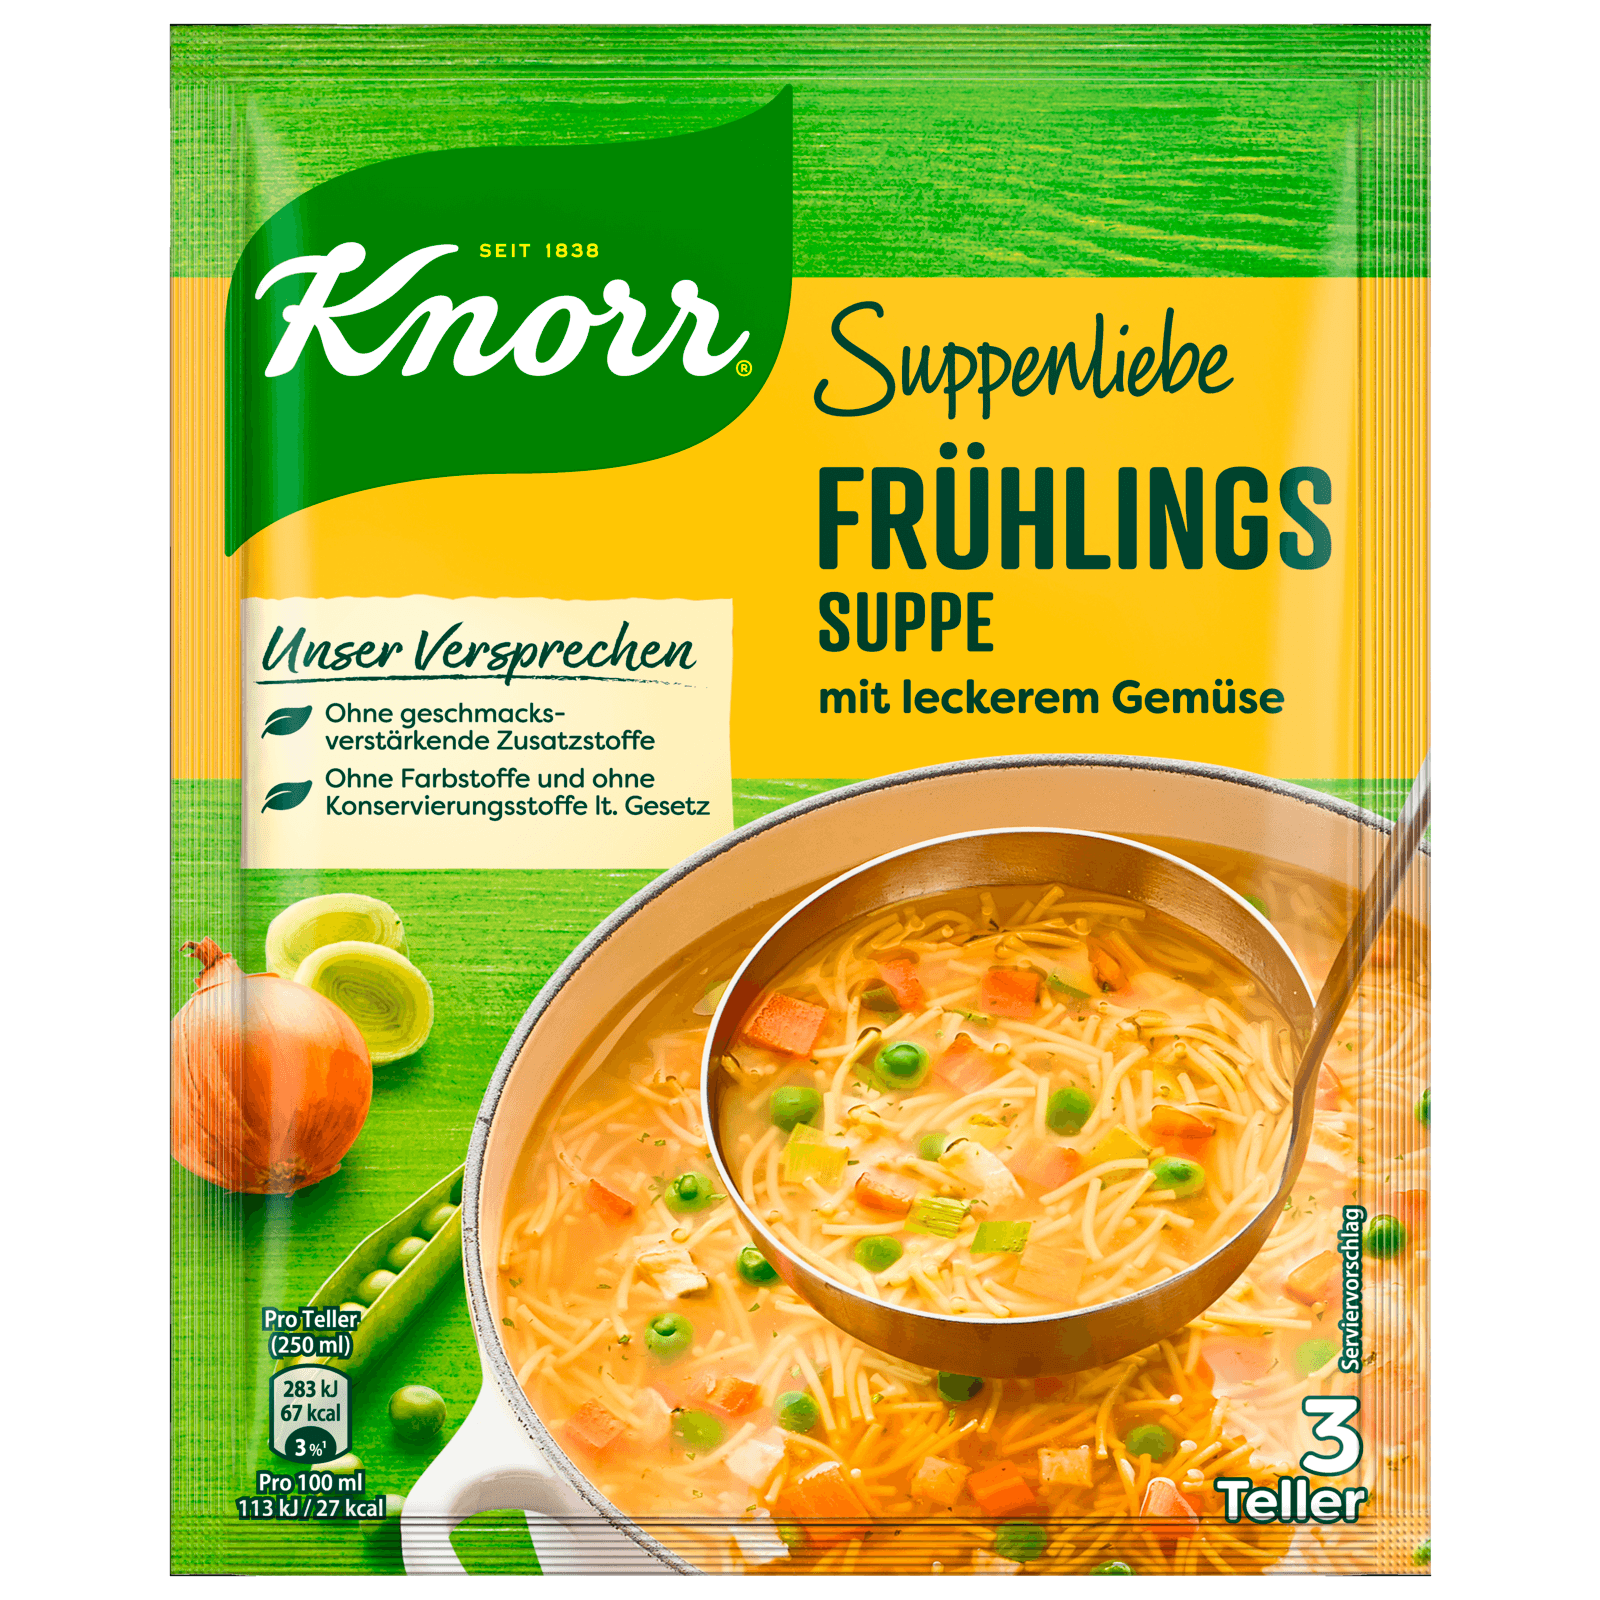 Knorr Suppenliebe online REWE 3 bei Suppe Frühlings Teller bestellen